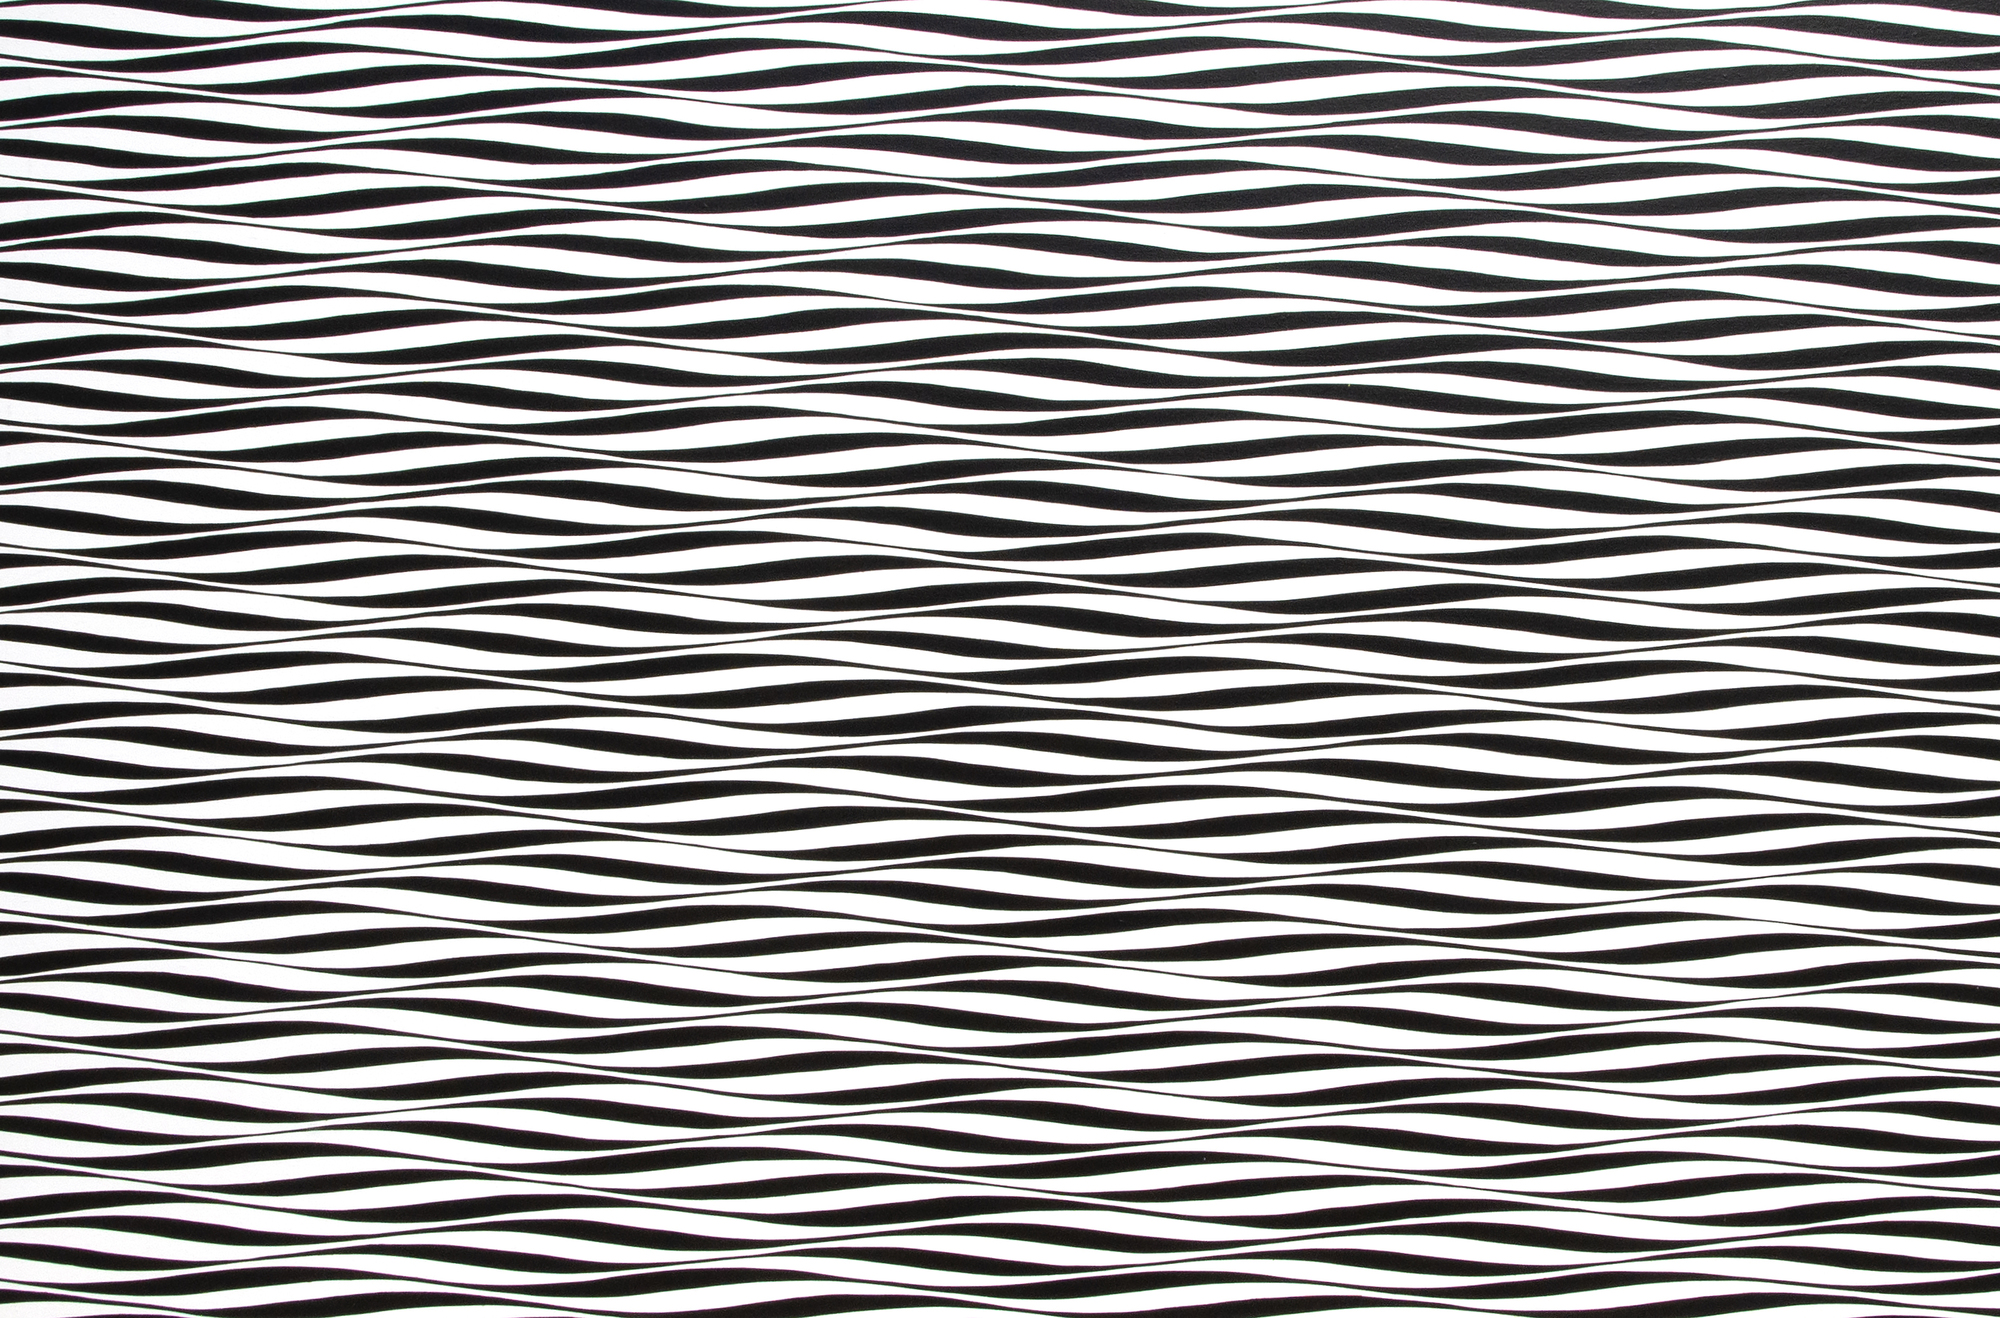 FRANCIS CELENTANO - Wellenförmige Einheiten - Acryl auf Leinwand - 36 x 90 in.